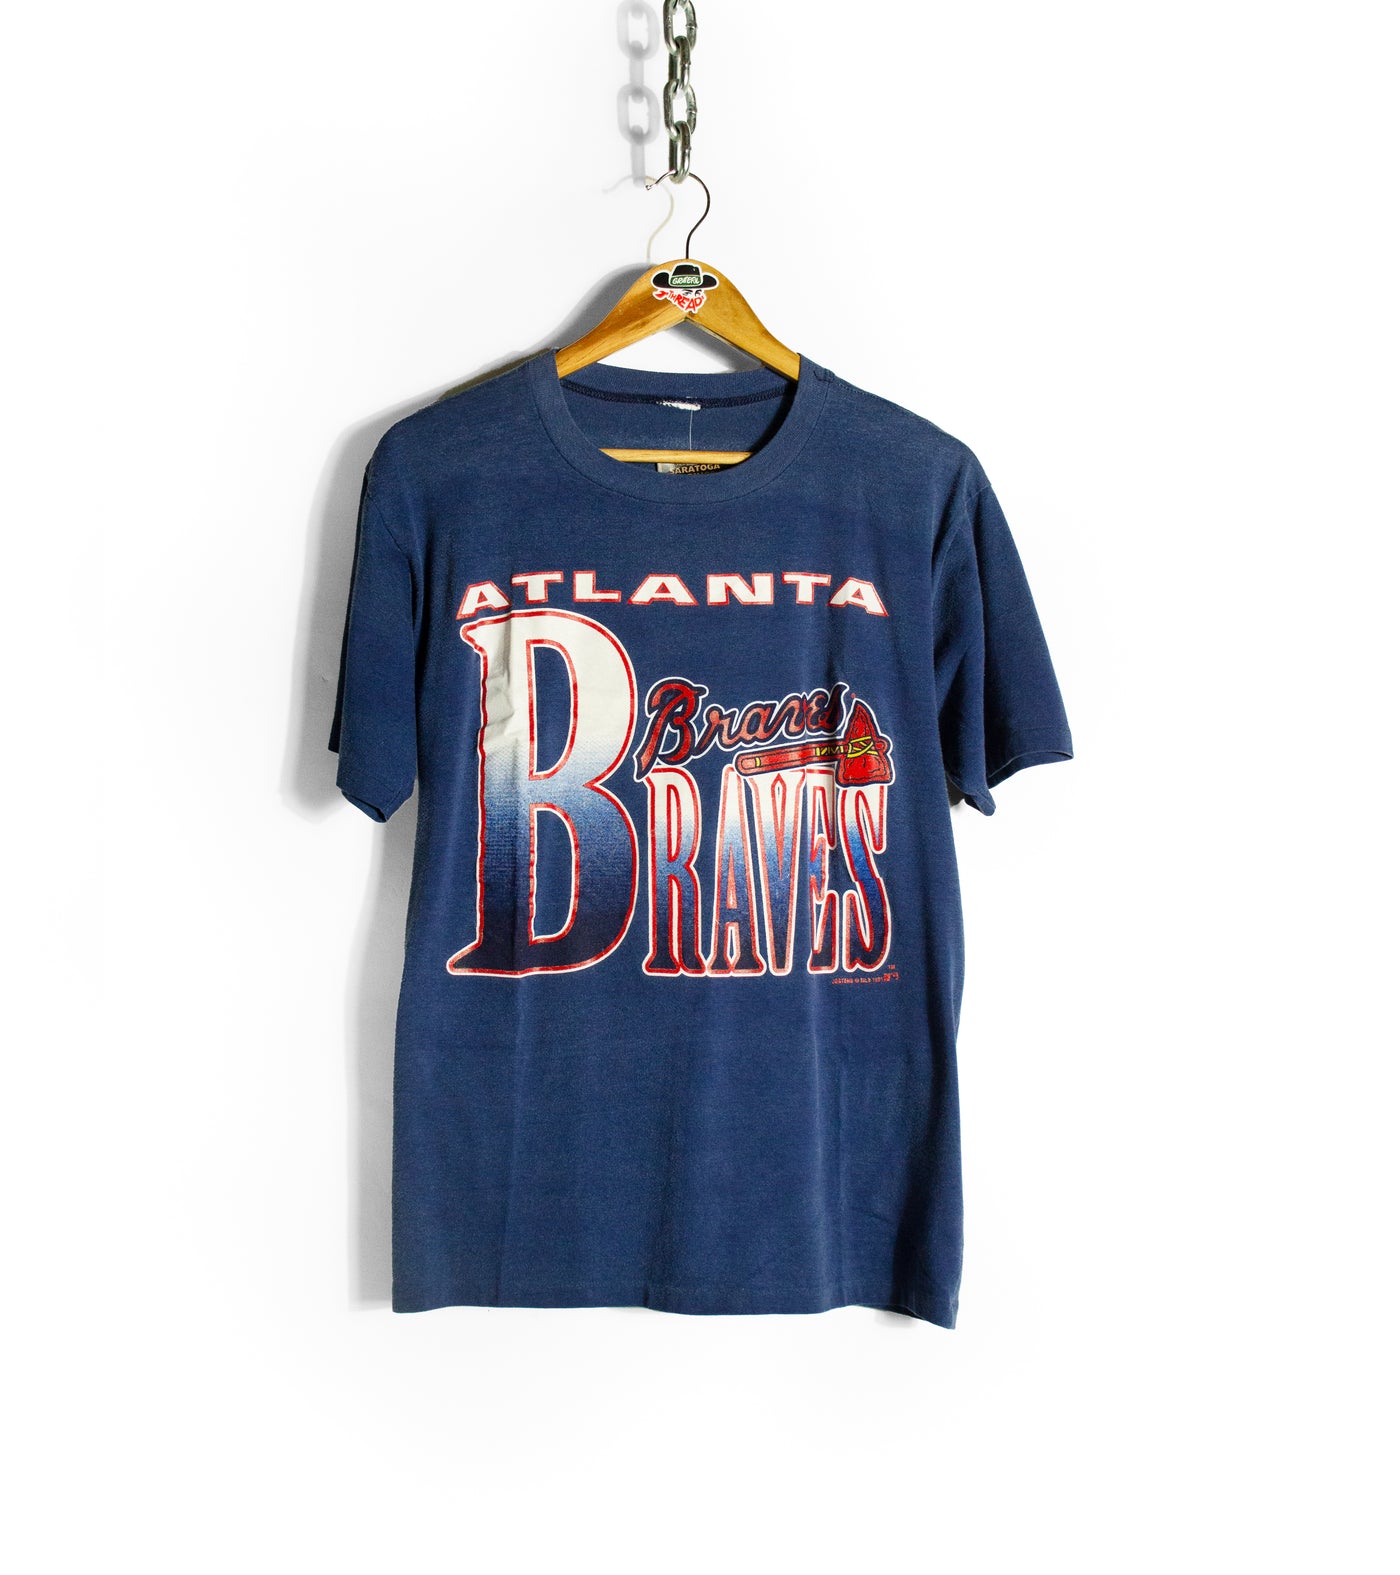 Vintage 1991 Atlanta Braves T-Shirt